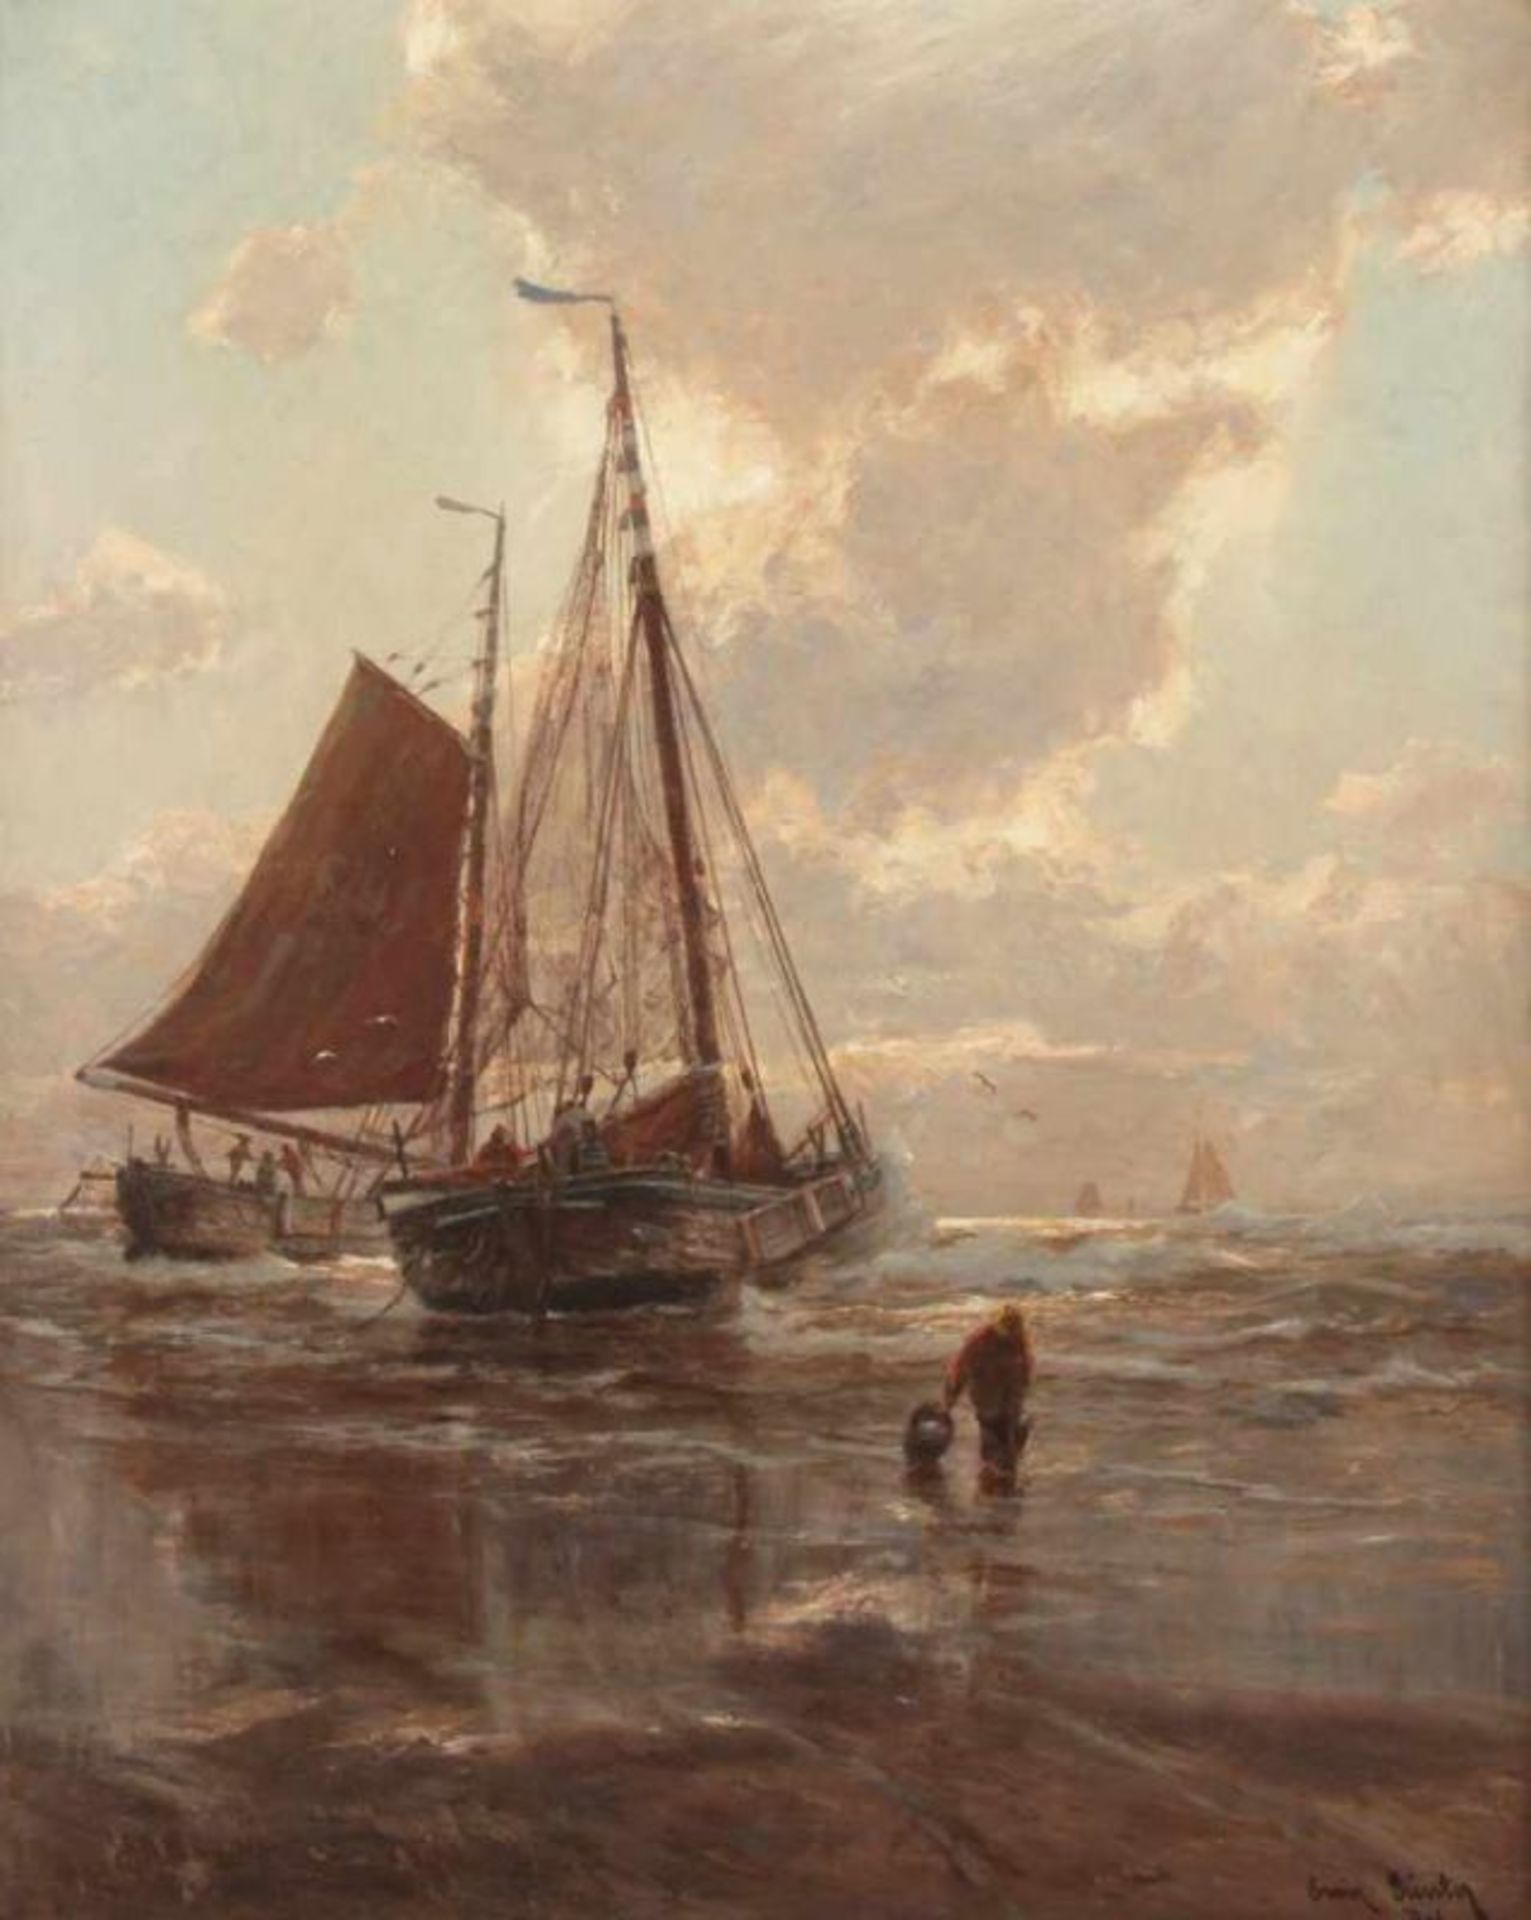 GÜNTHER, Erwin (1864-1927), "Fischerboote am Strand", Öl/Lwd., 73 x 59, doubliert, unten rechts